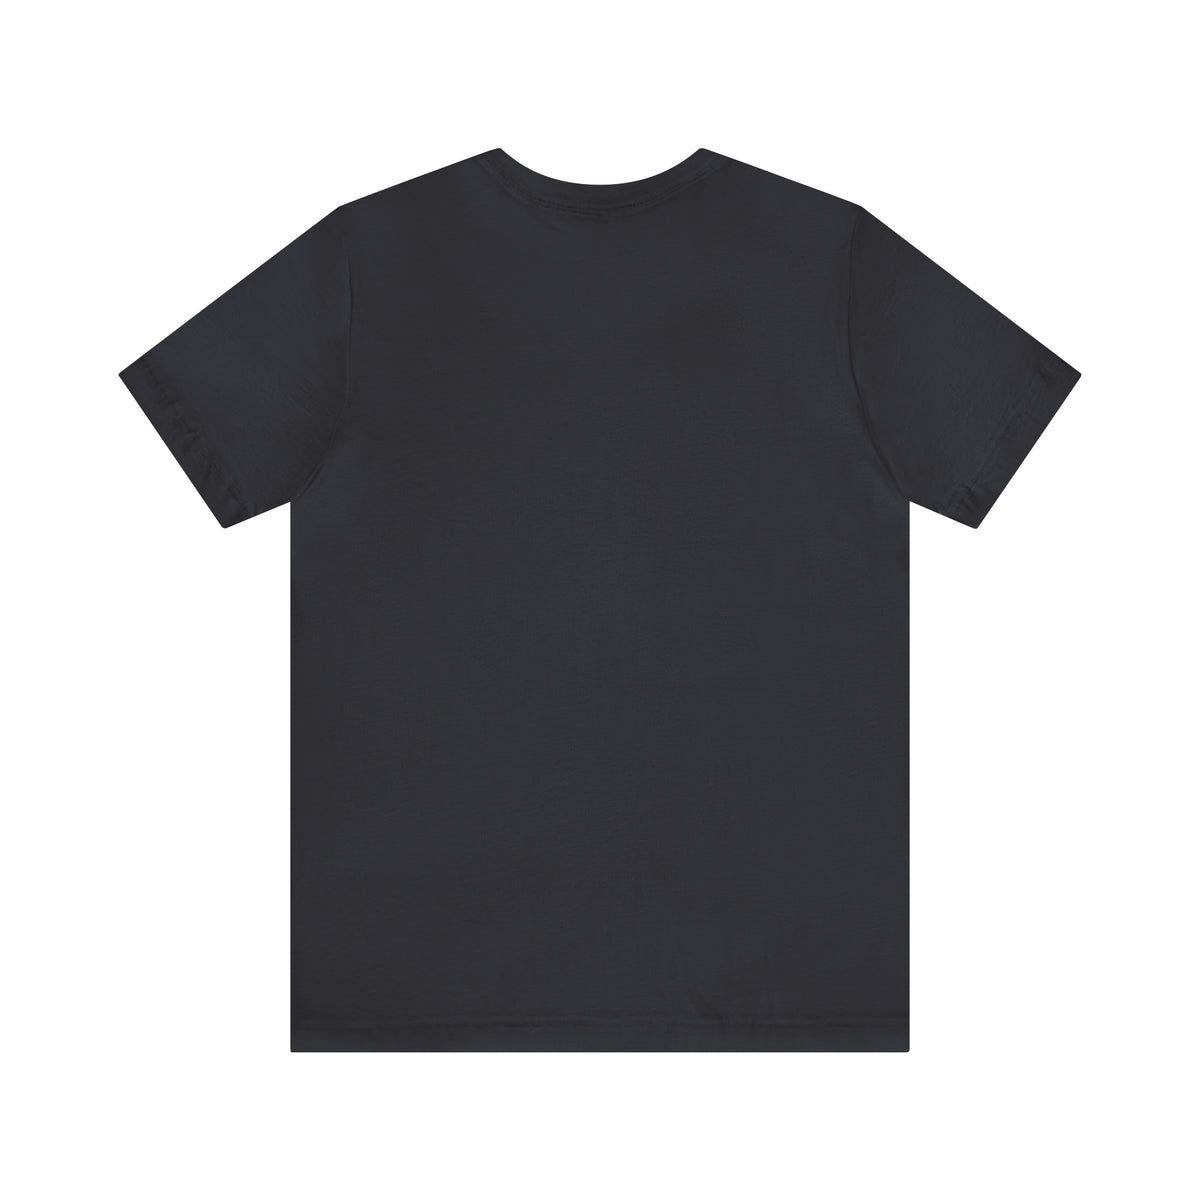 The Centaur Unisex T-Shirt